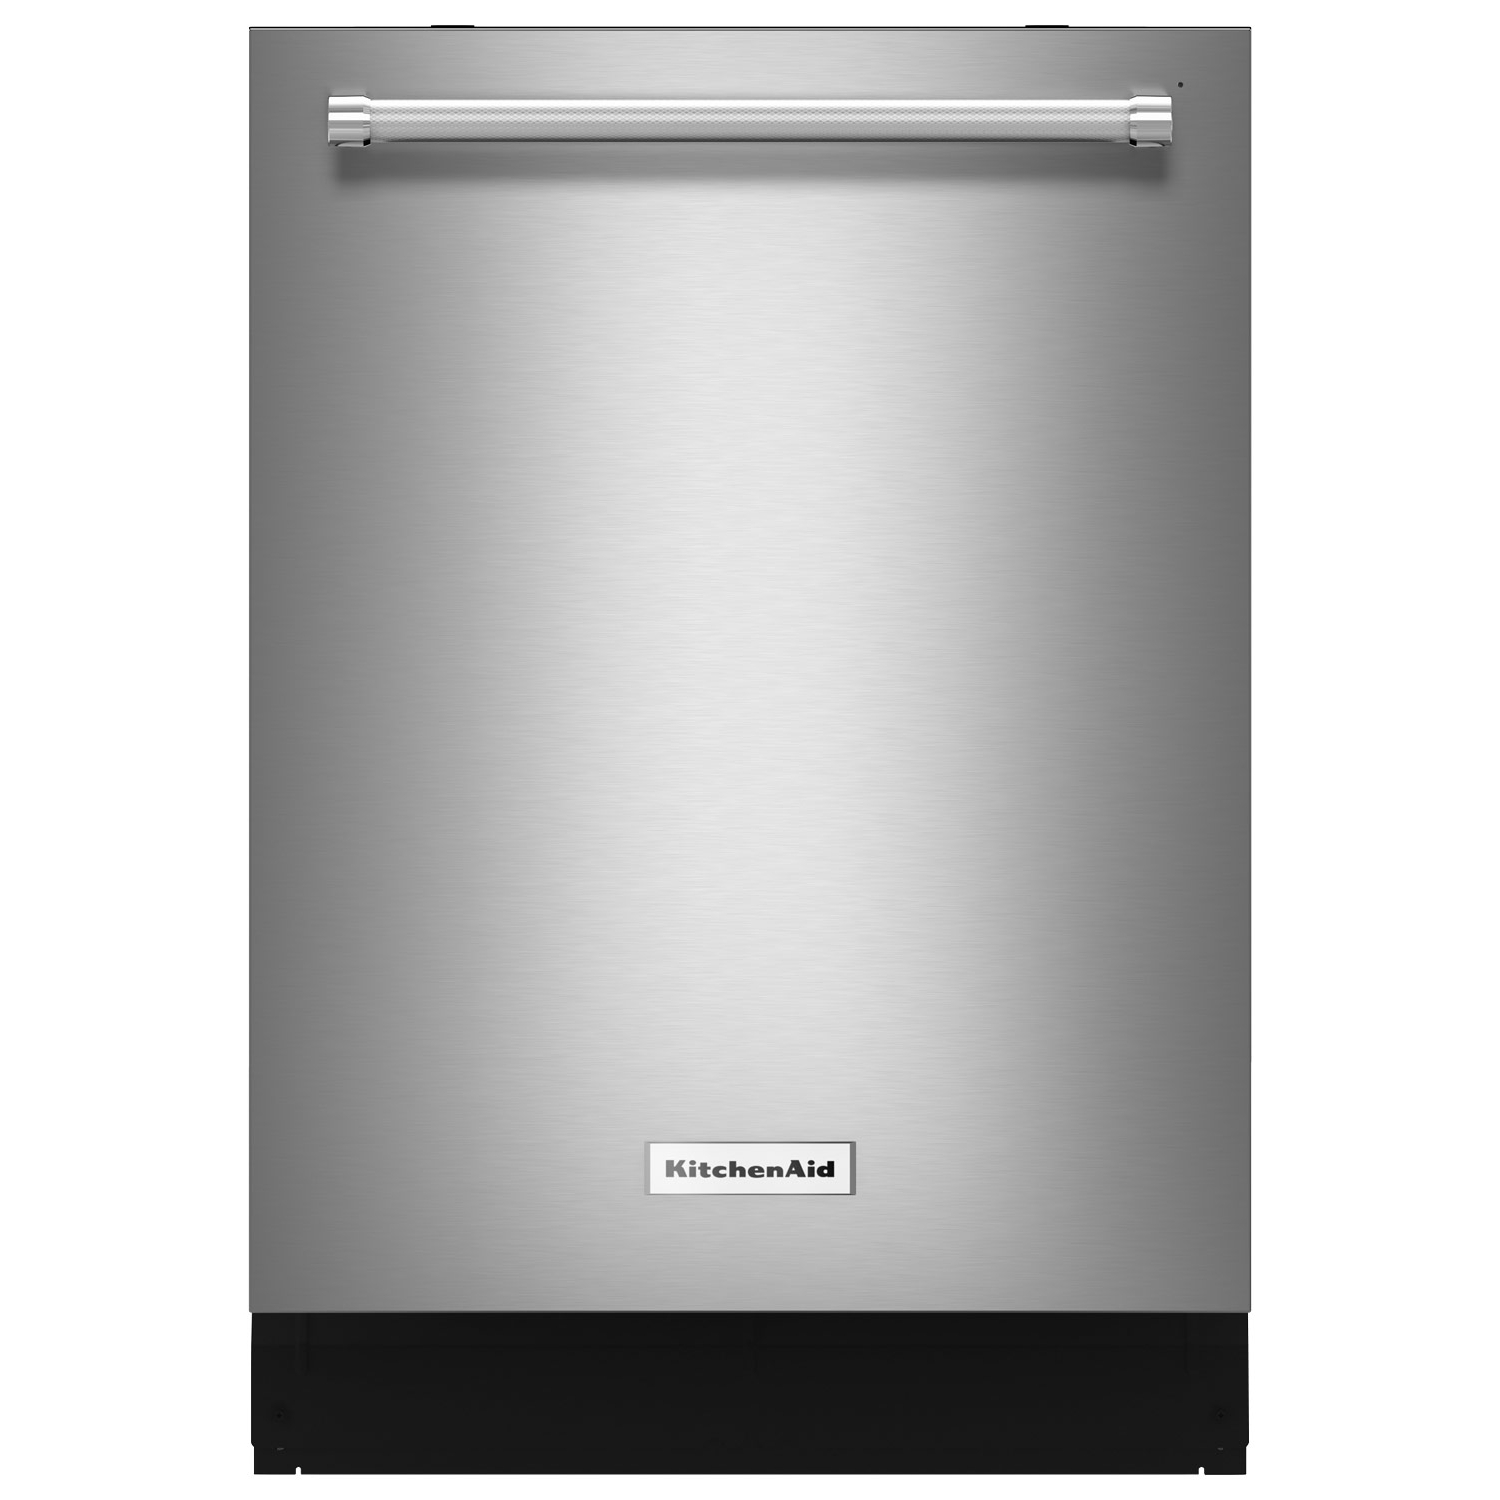 Buy KitchenAid Dishwasher KDTM404ESS